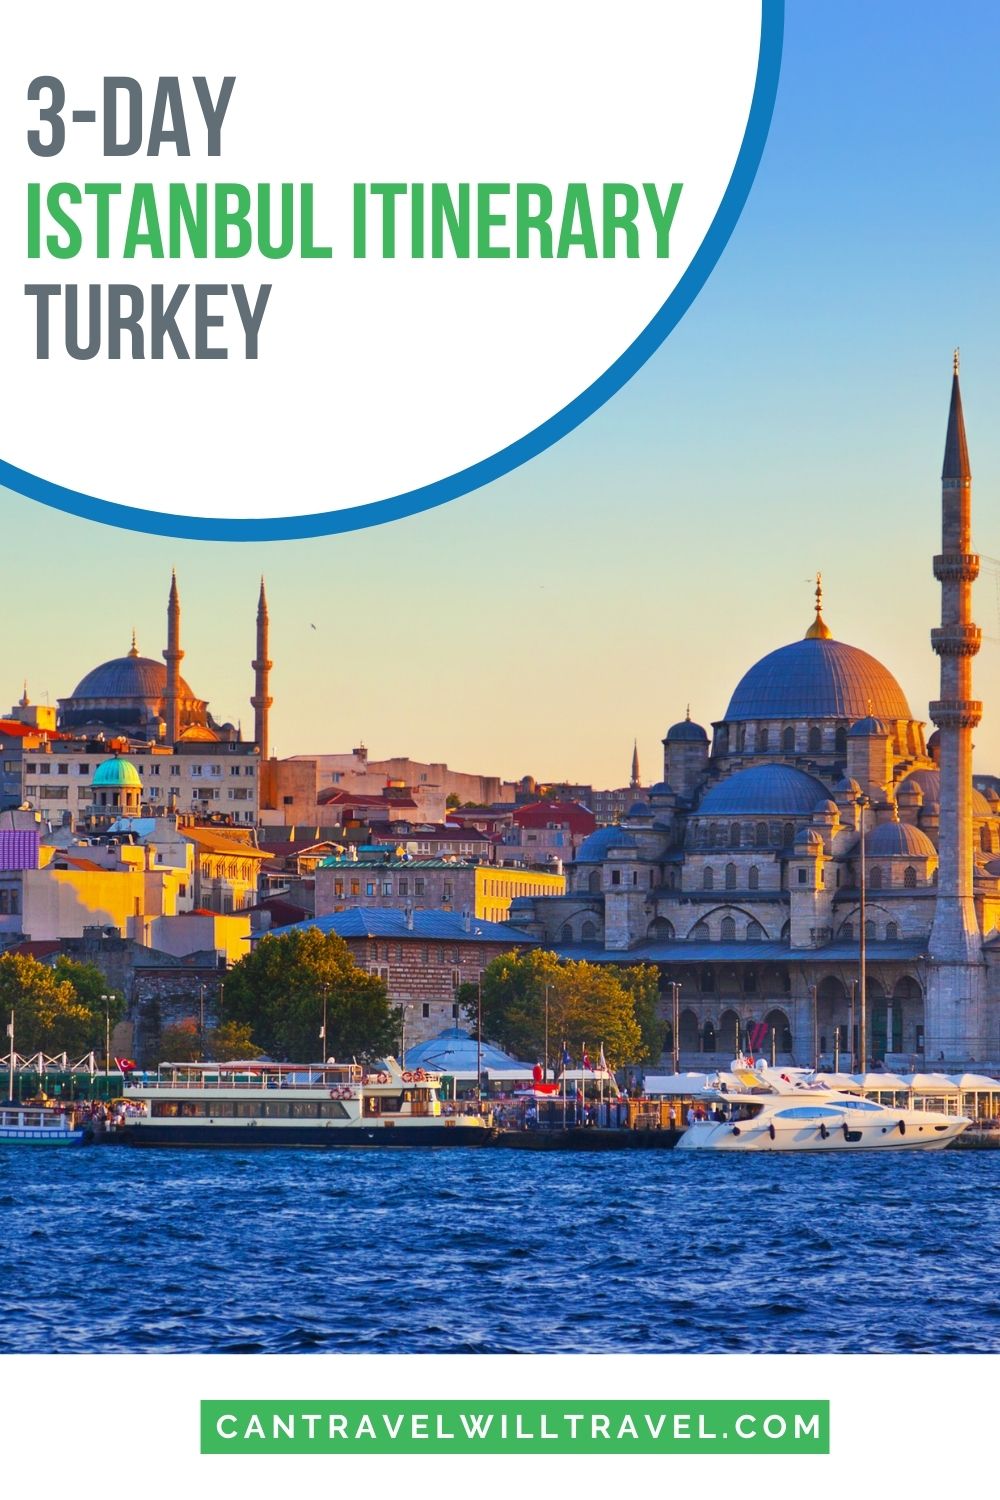 3-Day Istanbul Itinerary, Turkey